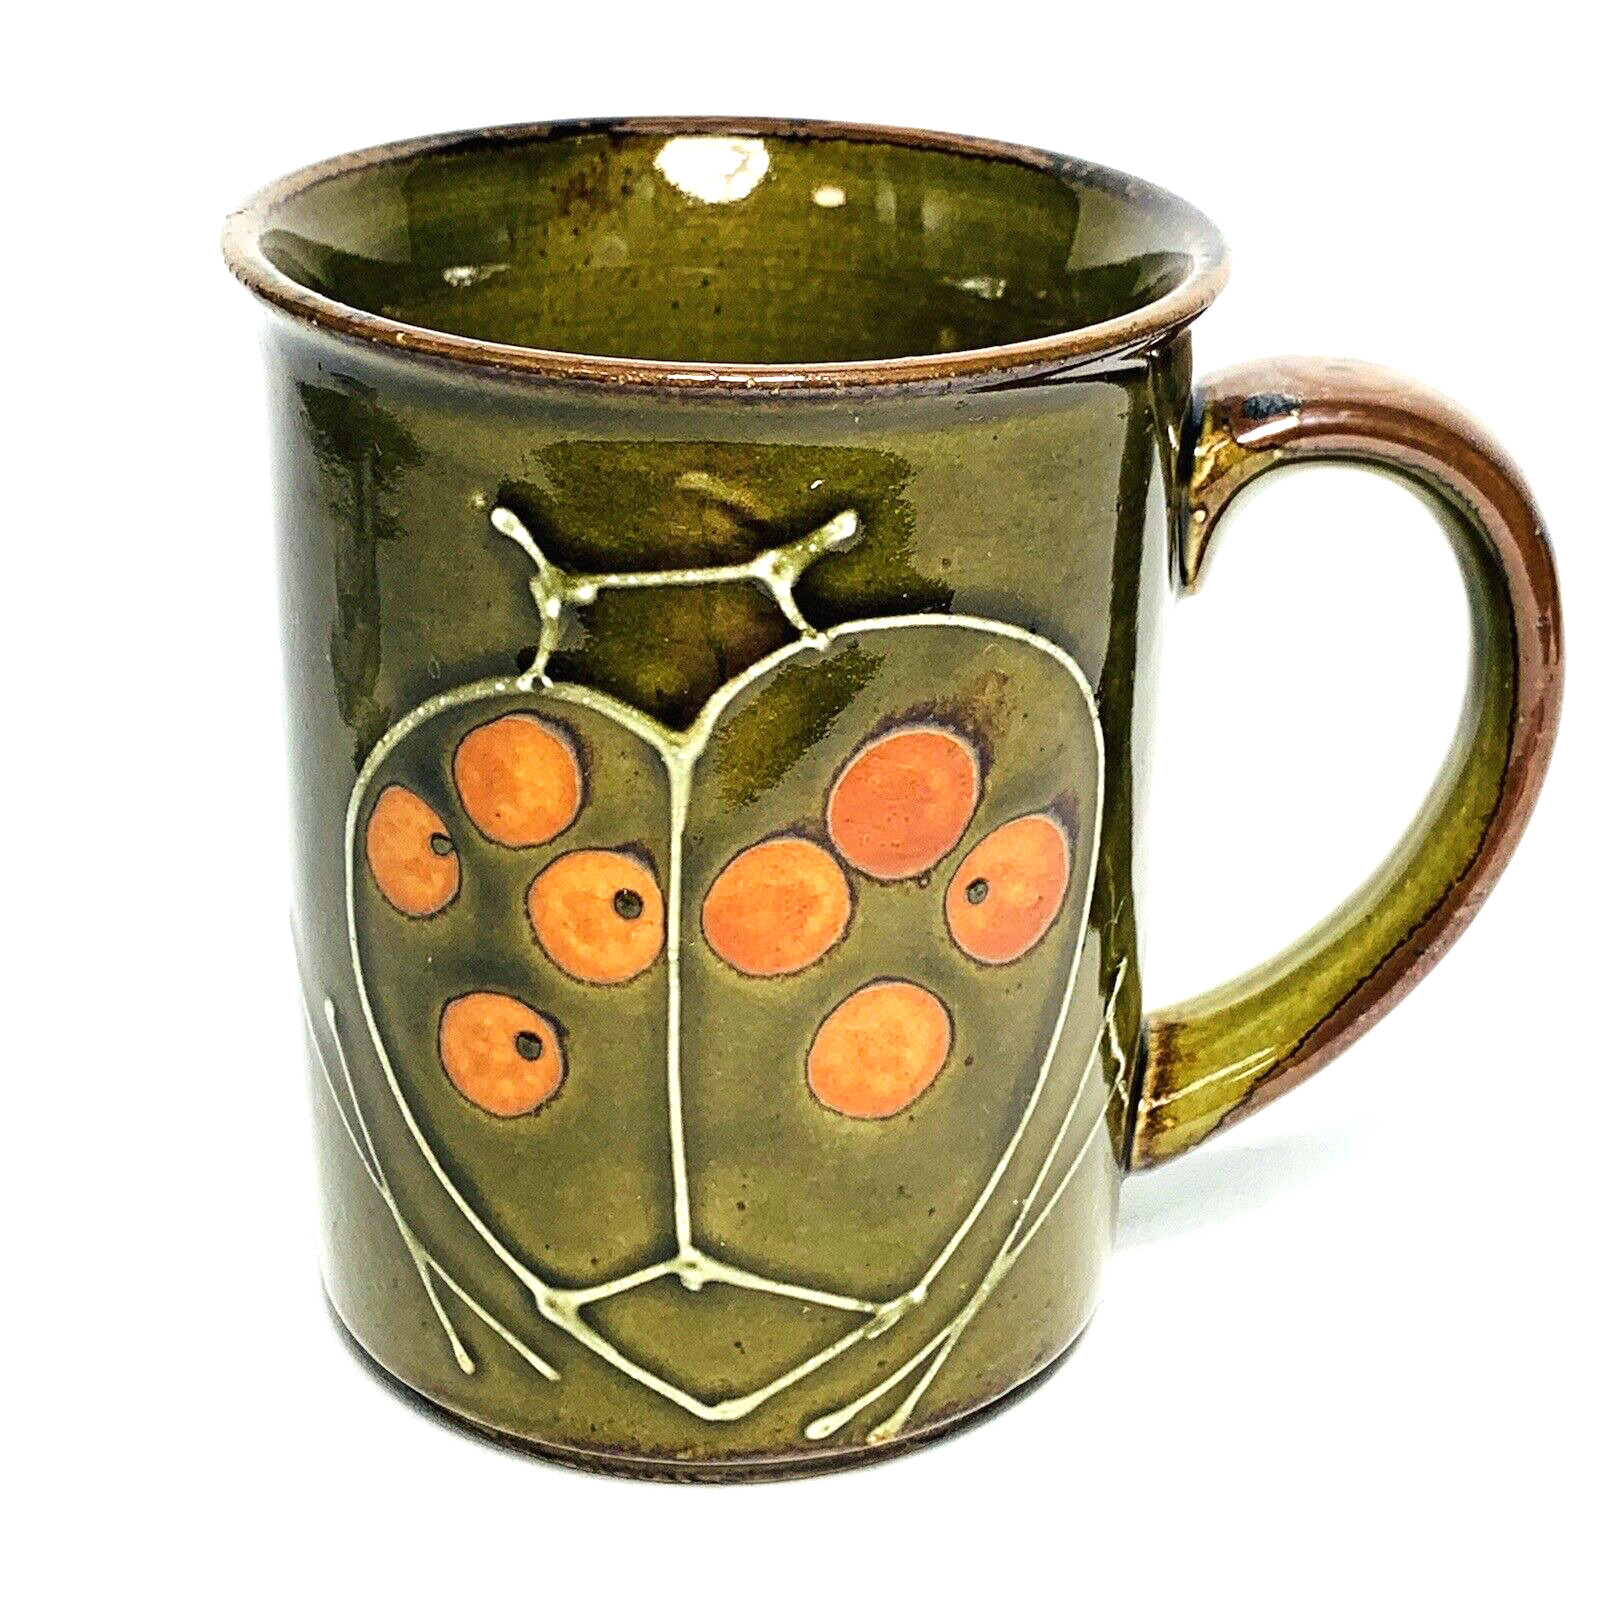 LADY BUG COFFEE MUG CUP Stoneware Ceramic Olive Green Orange Spots Vintage Brown